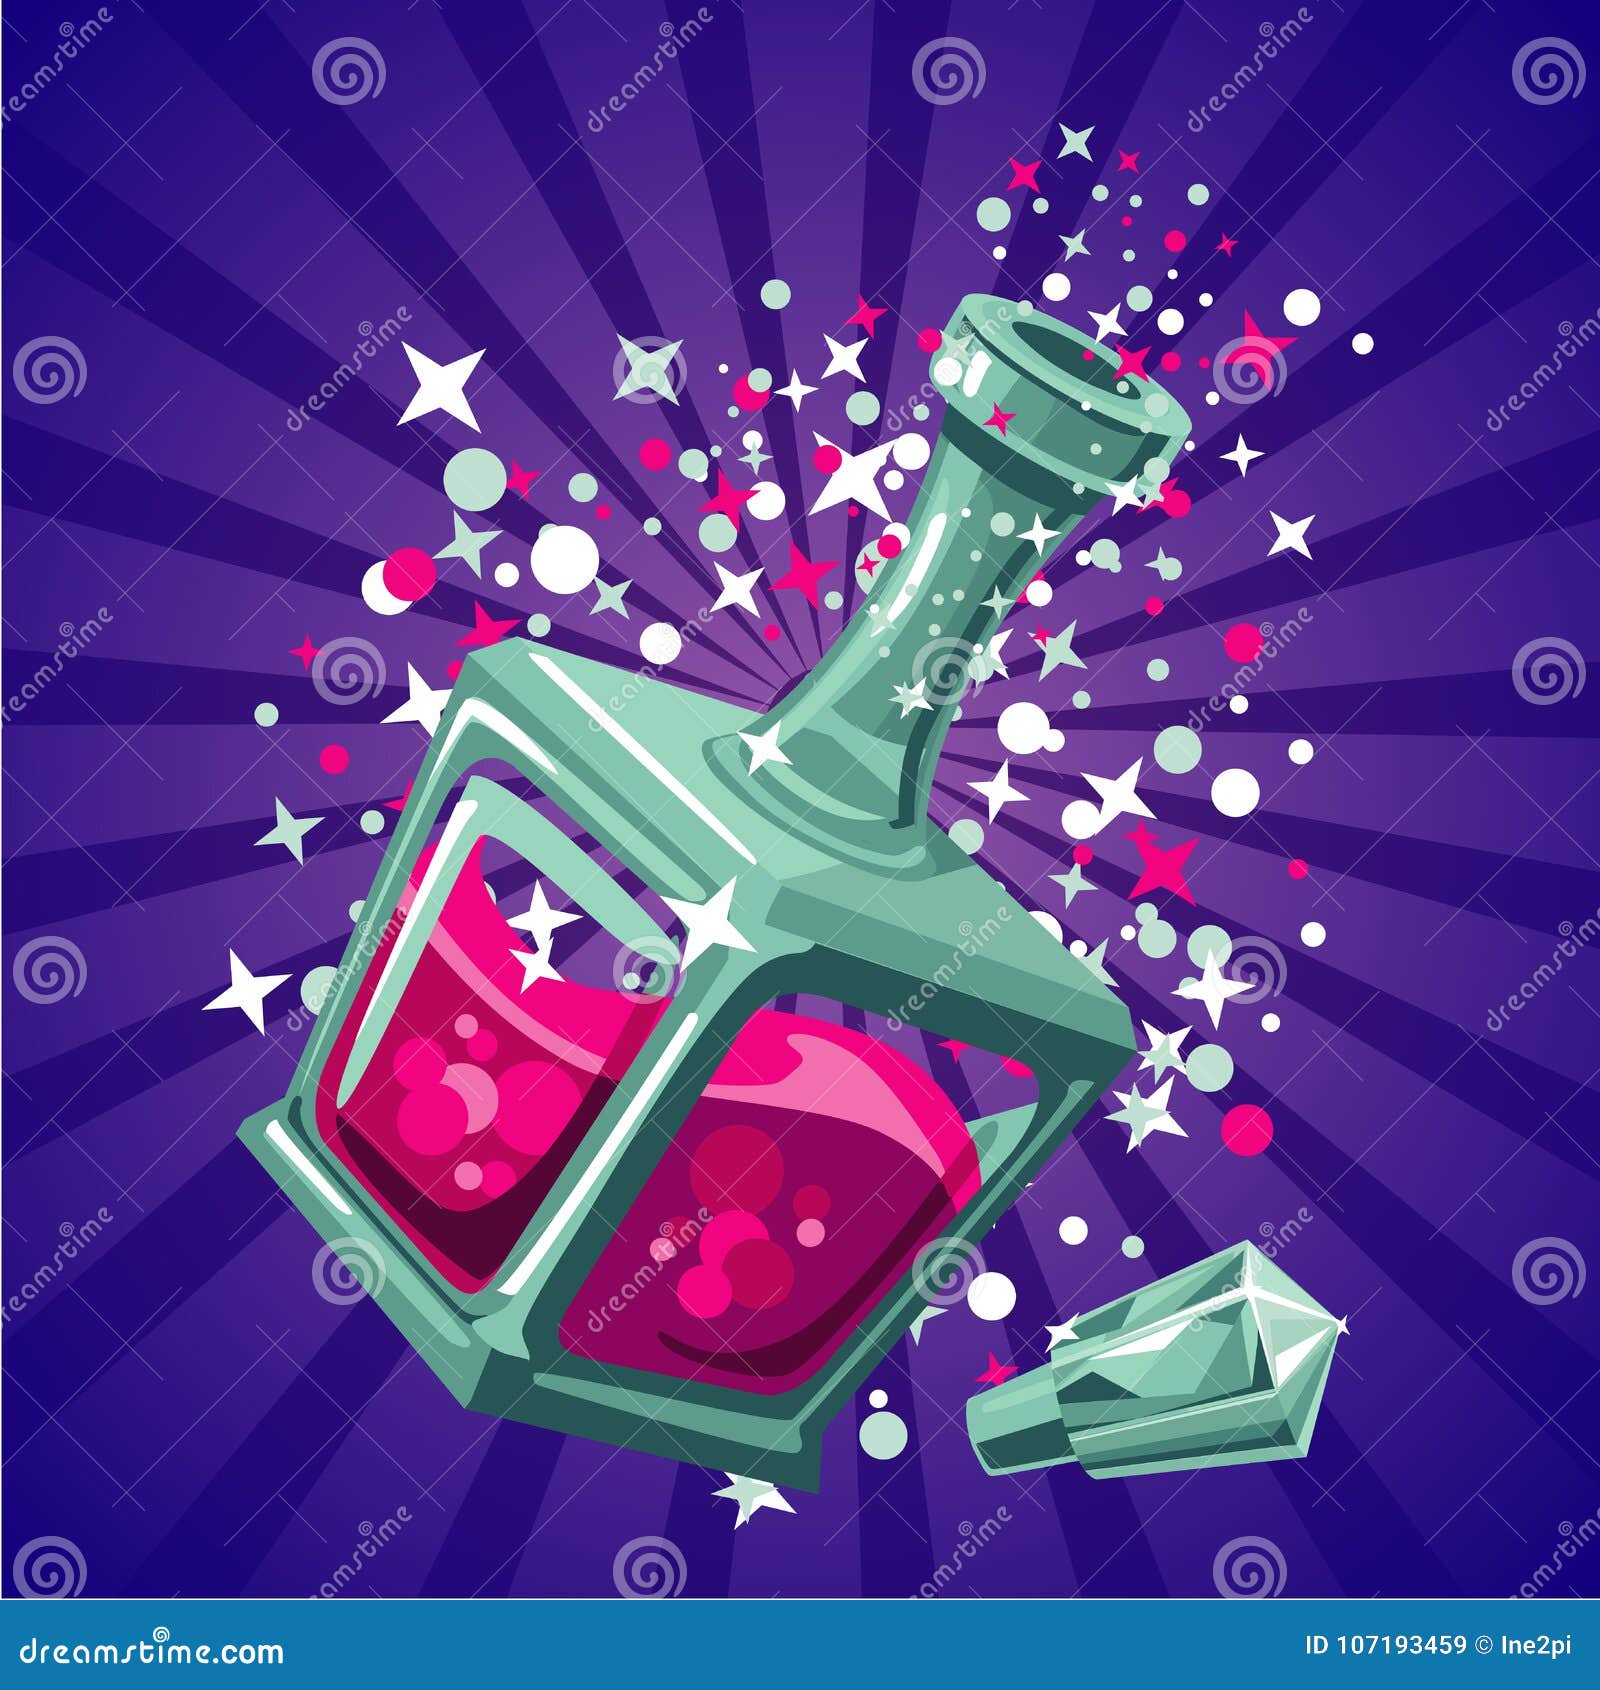 magical elixir. game  concept magic bottle. cartoon illustartion